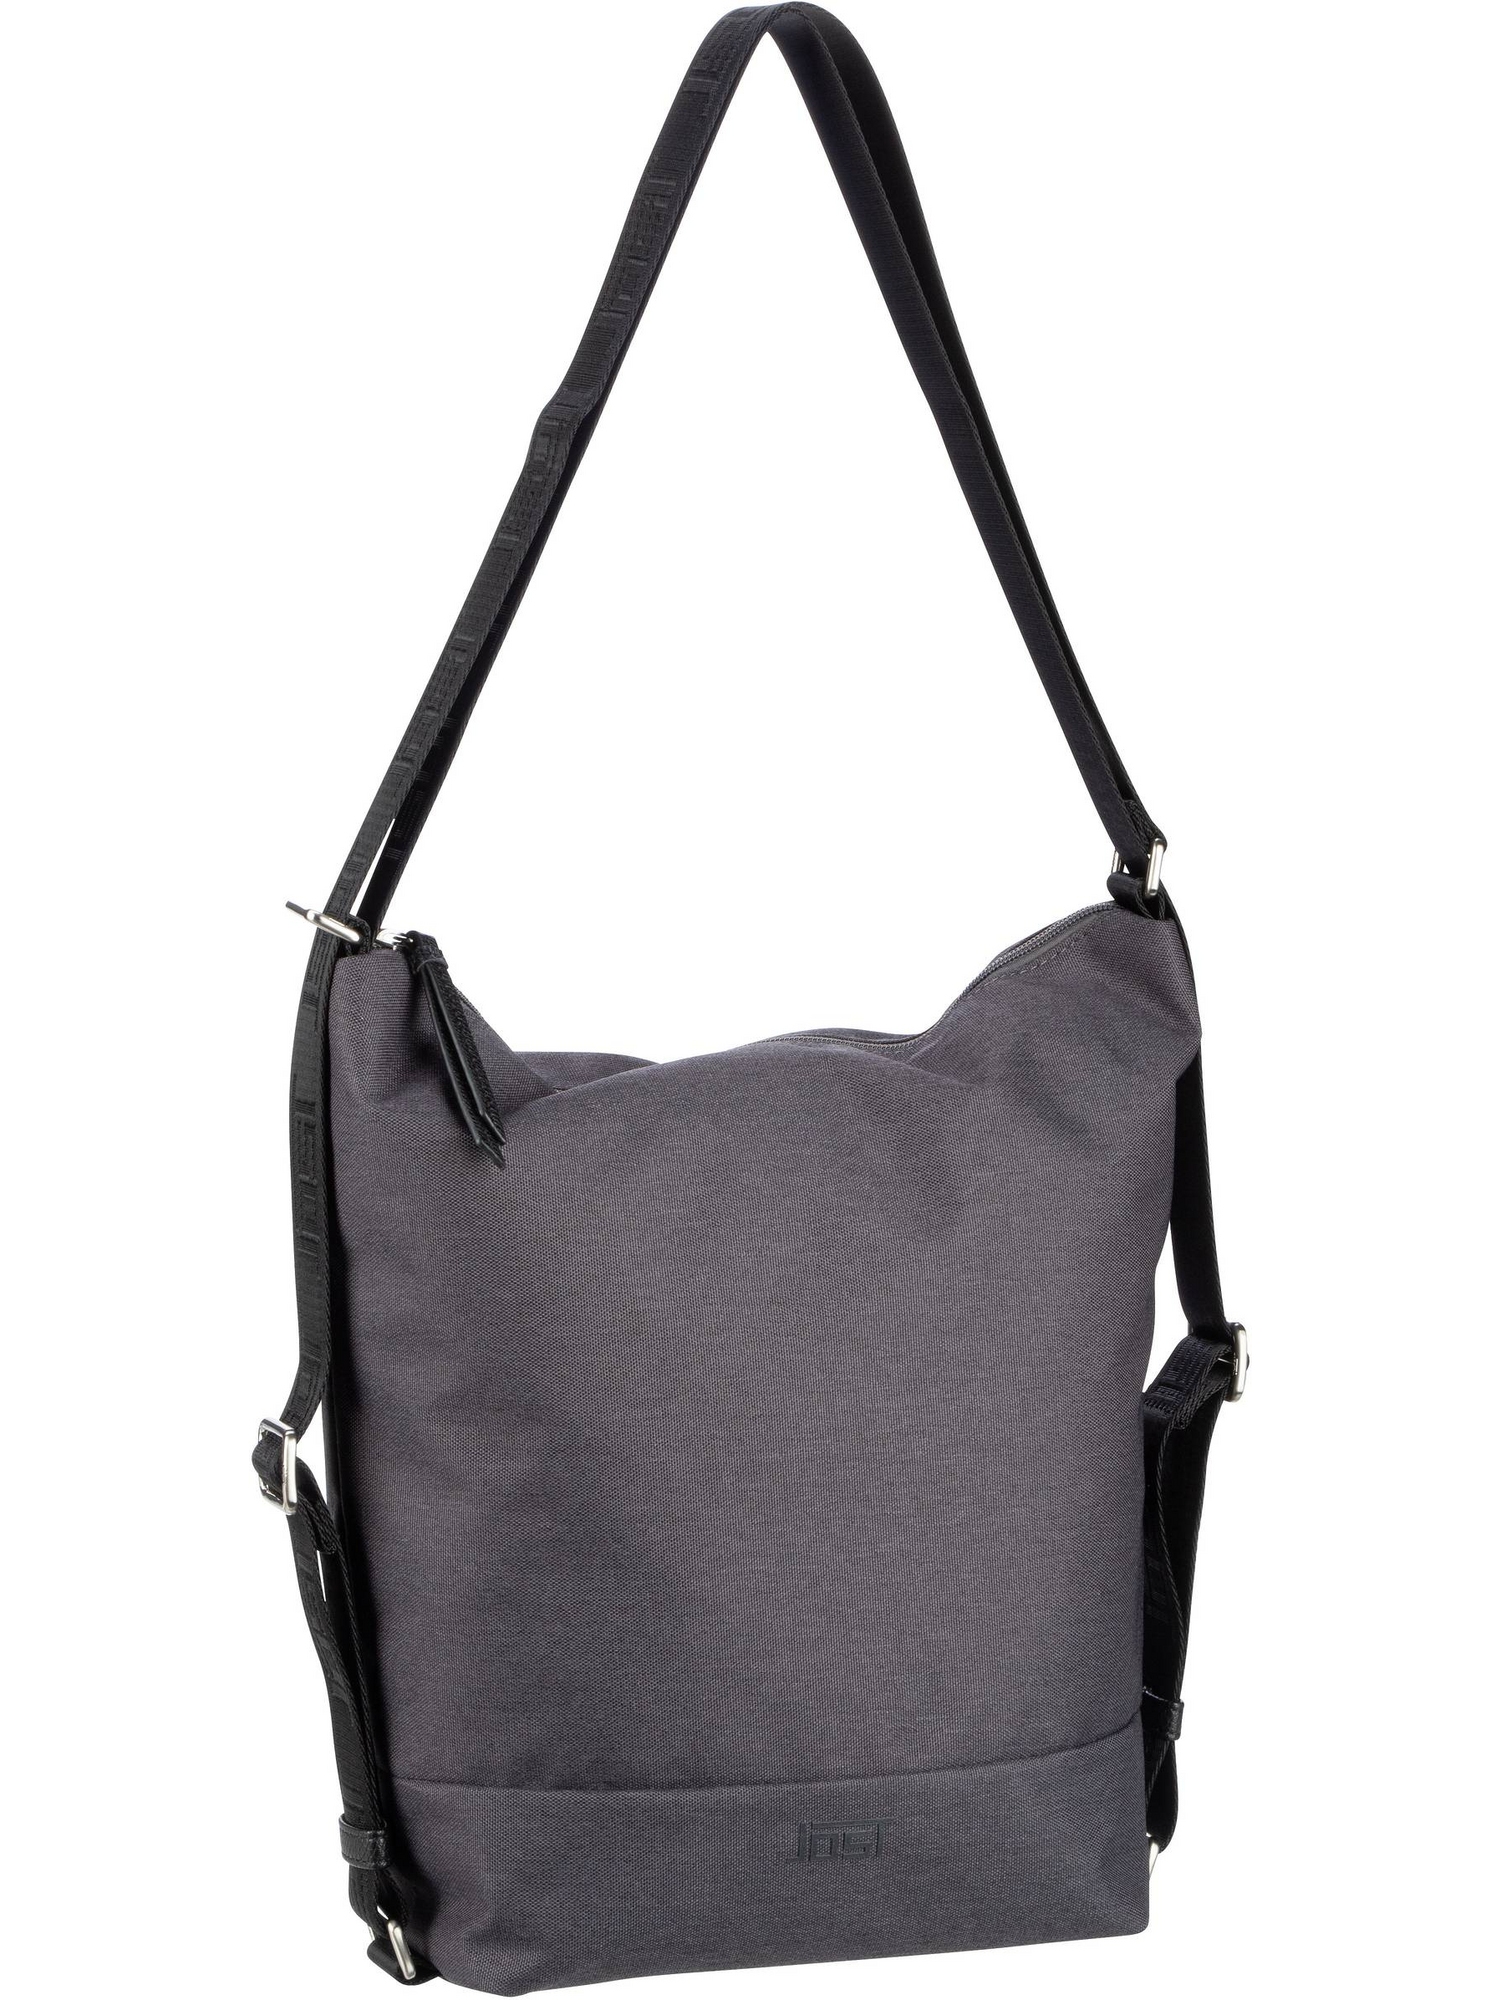 Рюкзак Jost/Backpack Bergen 1103 3 Way Bag, темно серый